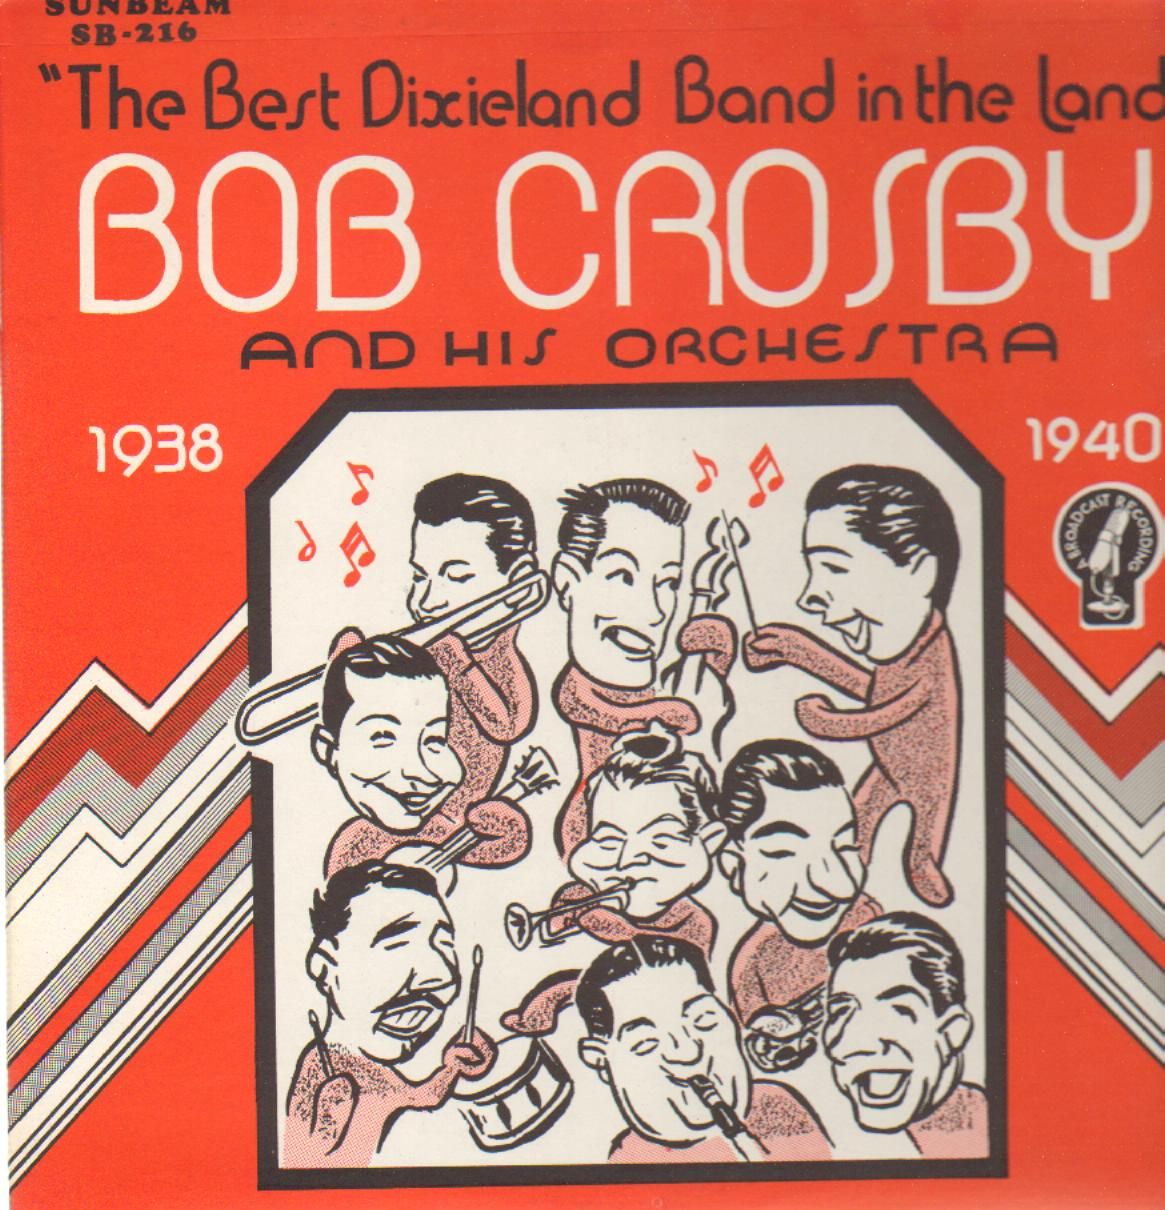 BOB CROSBY - Broadcast Performances 1938-40 cover 